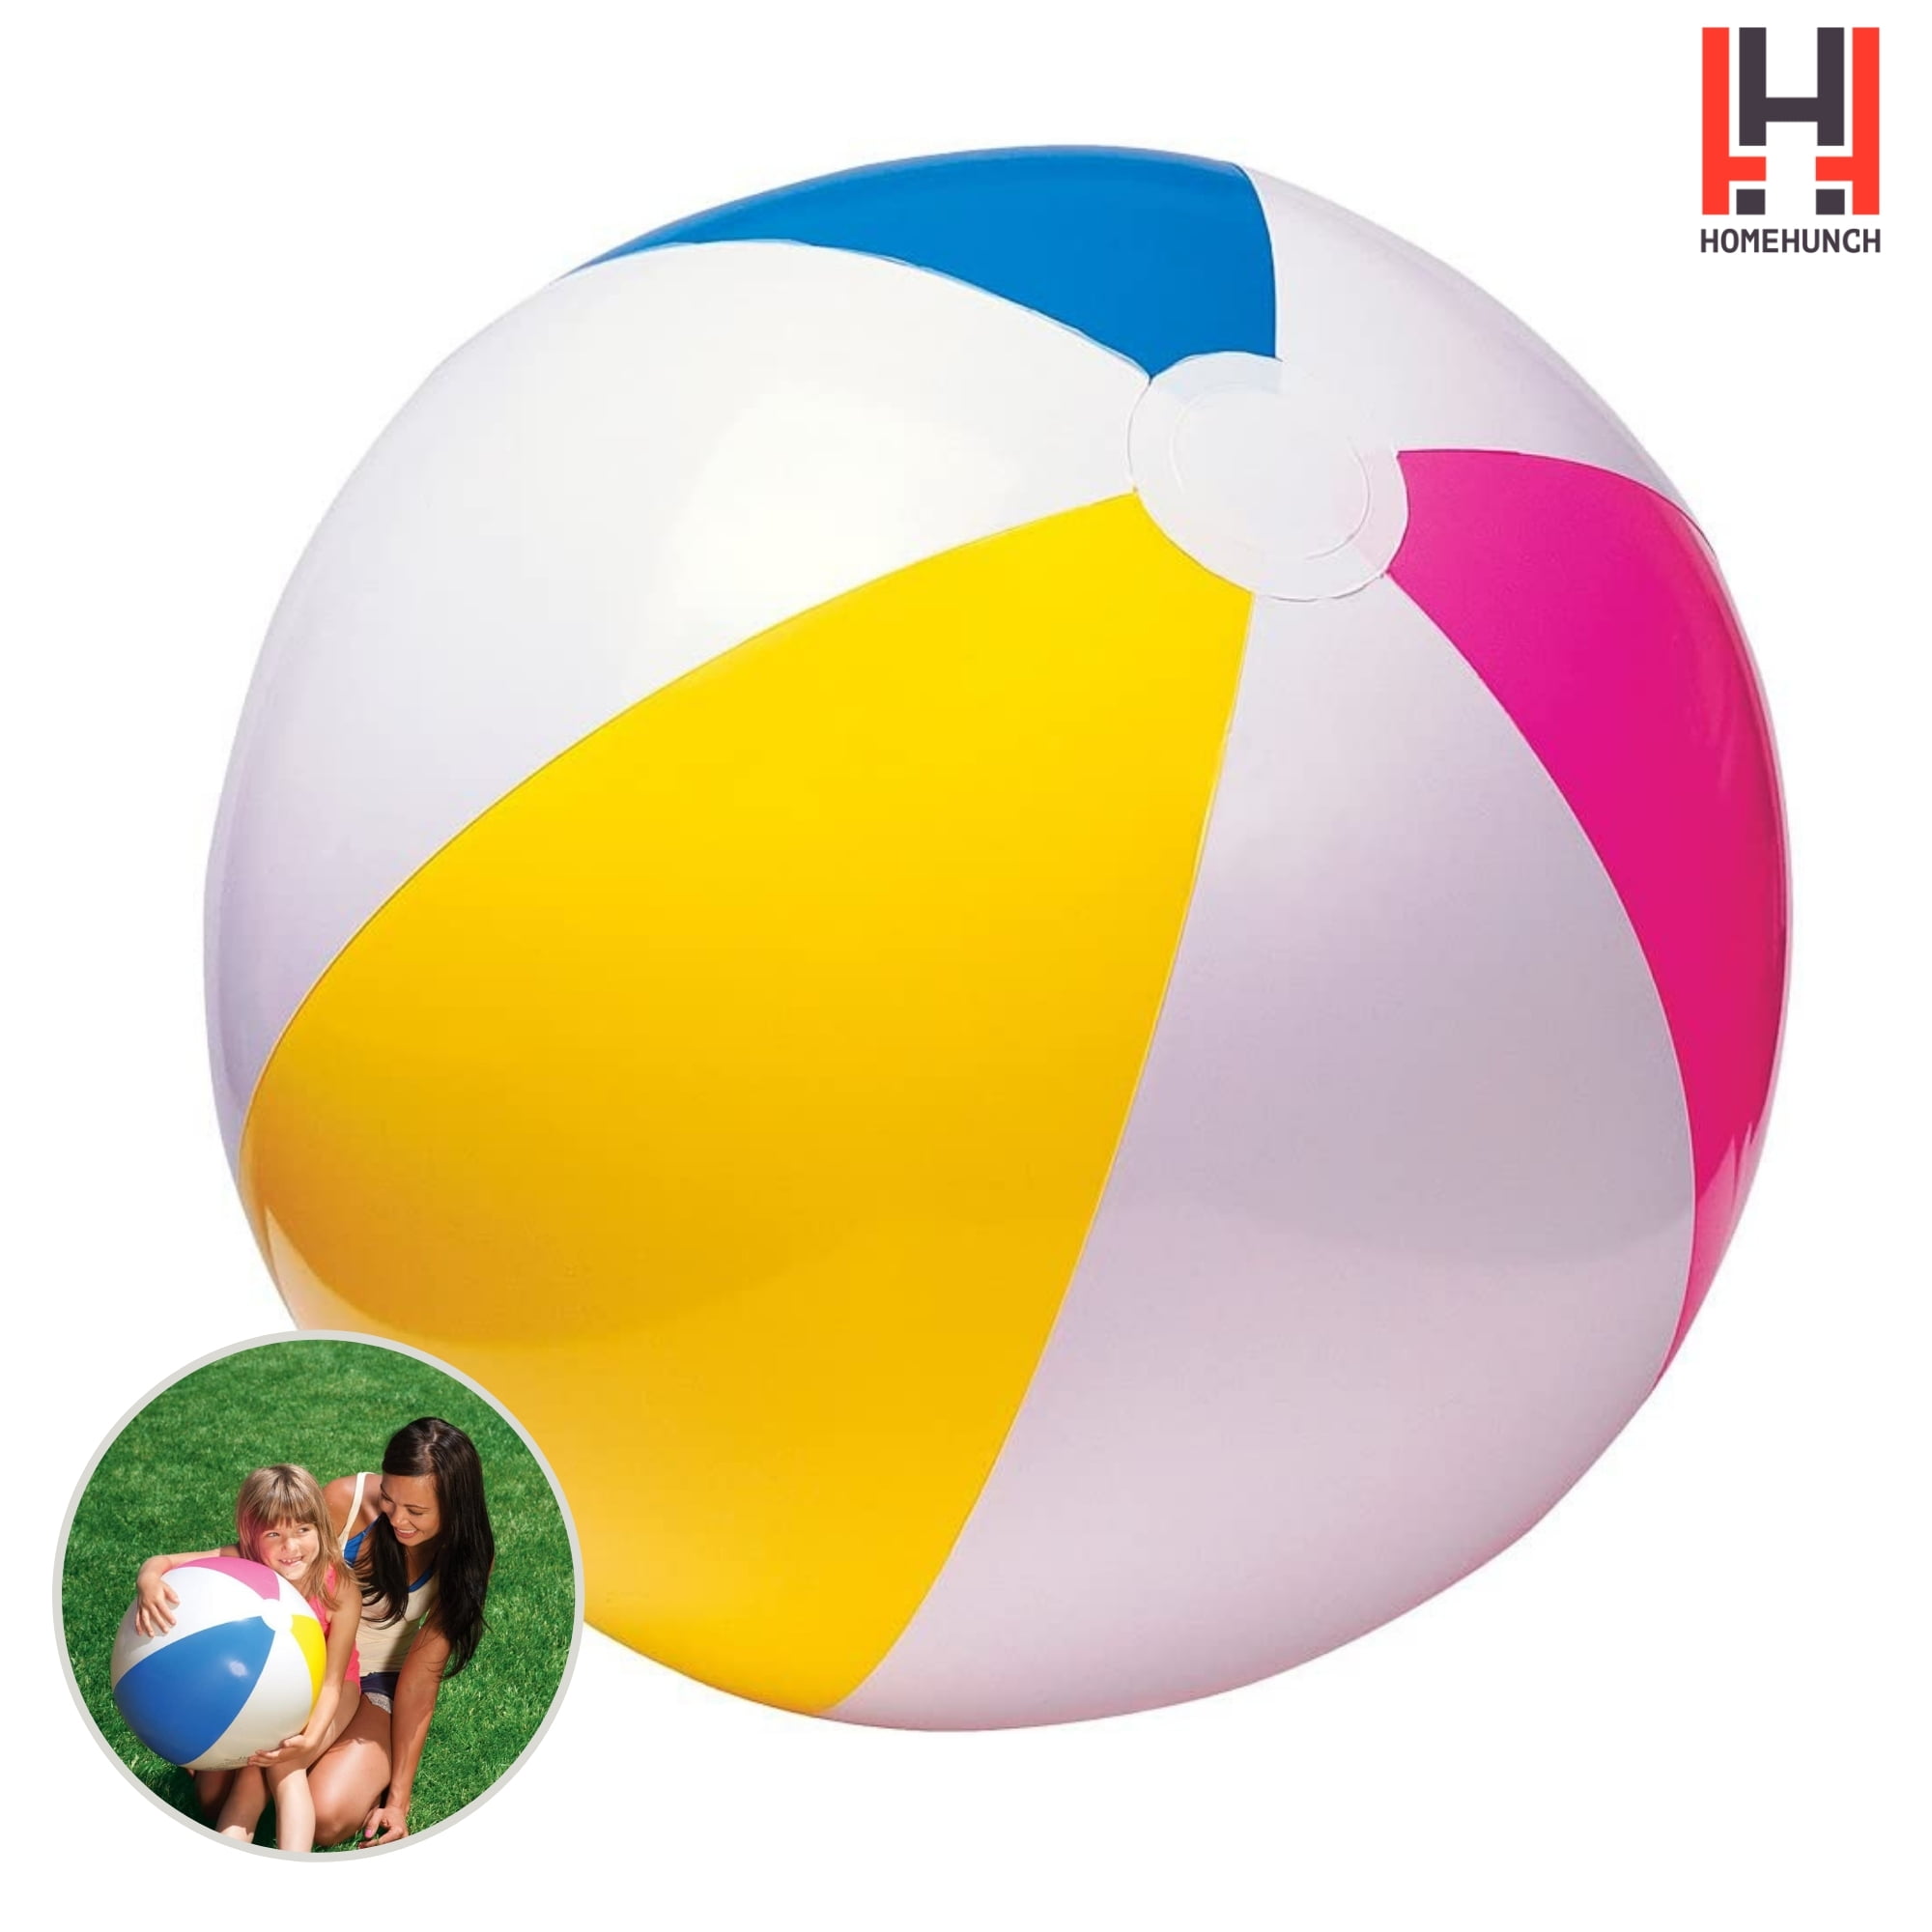 38cm Inflatable Blow Up Football Beach Ball Soccer Ball Kids Outdoor Toy Kp 